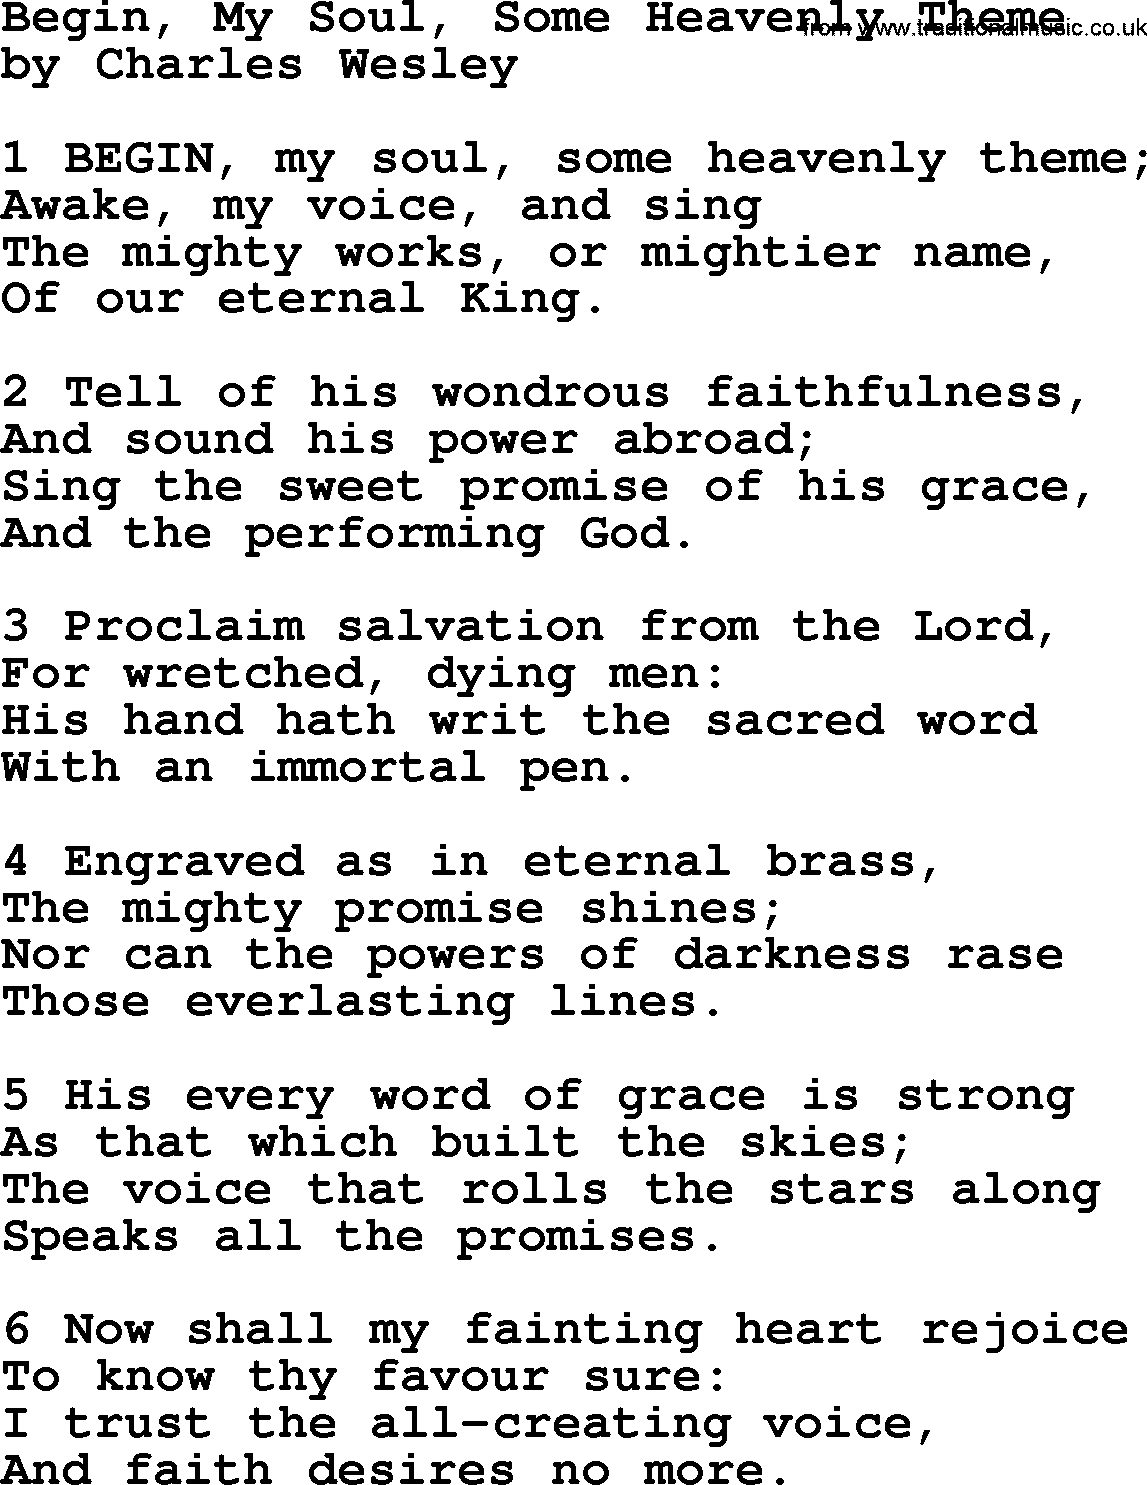 Charles Wesley hymn: Begin, My Soul, Some Heavenly Theme, lyrics